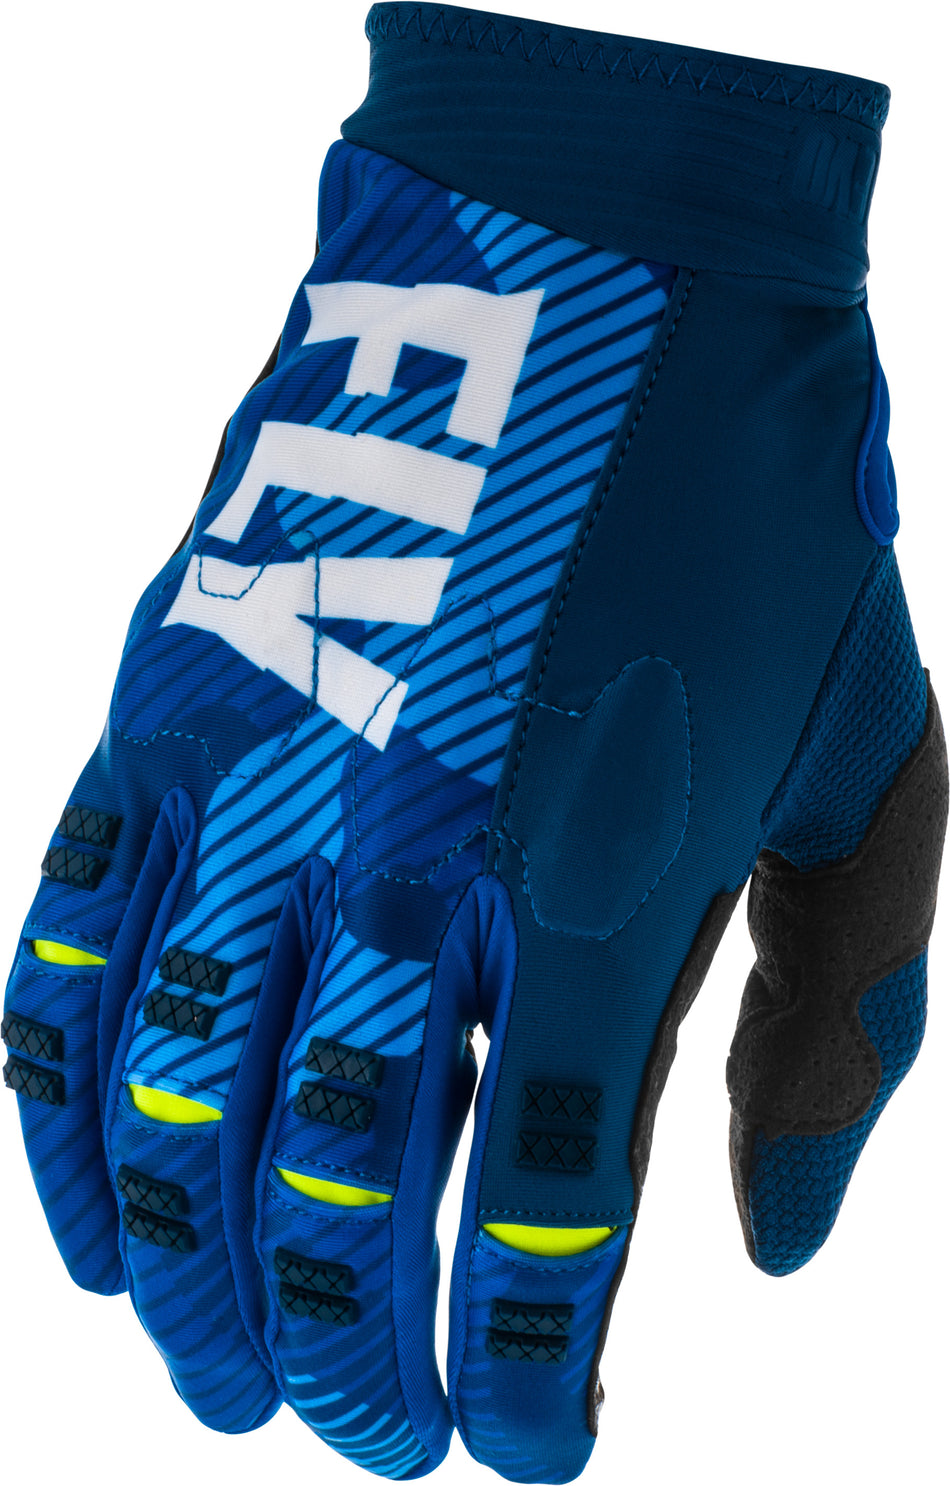 FLY RACING Evolution Gloves Blue/White Sz 13 373-11113